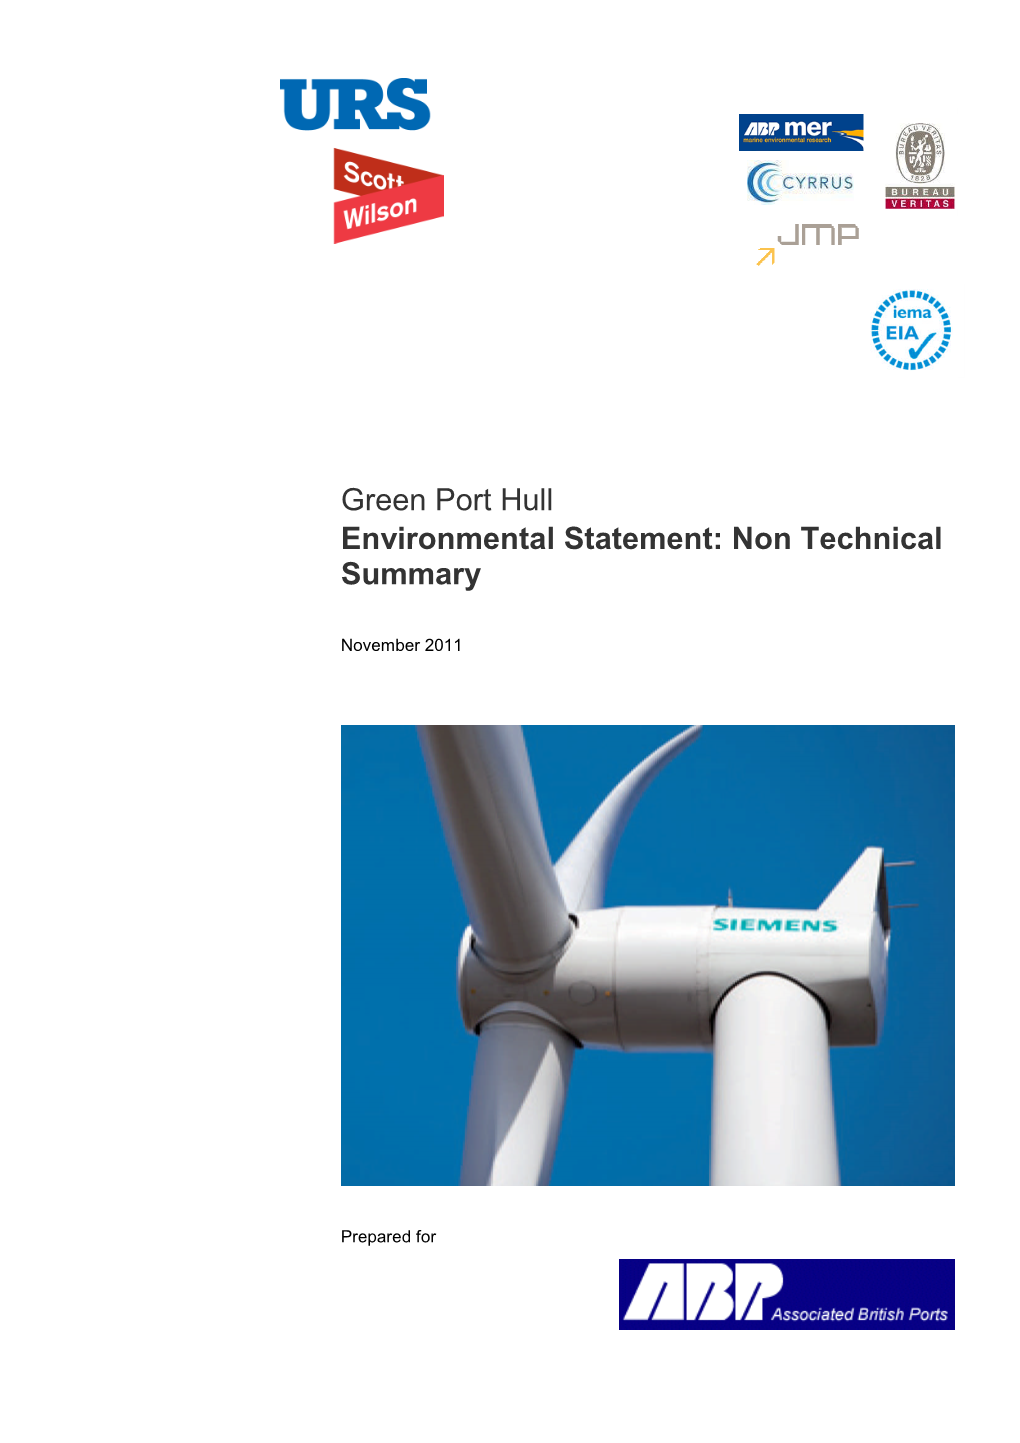 Green Port Hull Environmental Statement: Non Technical Summary